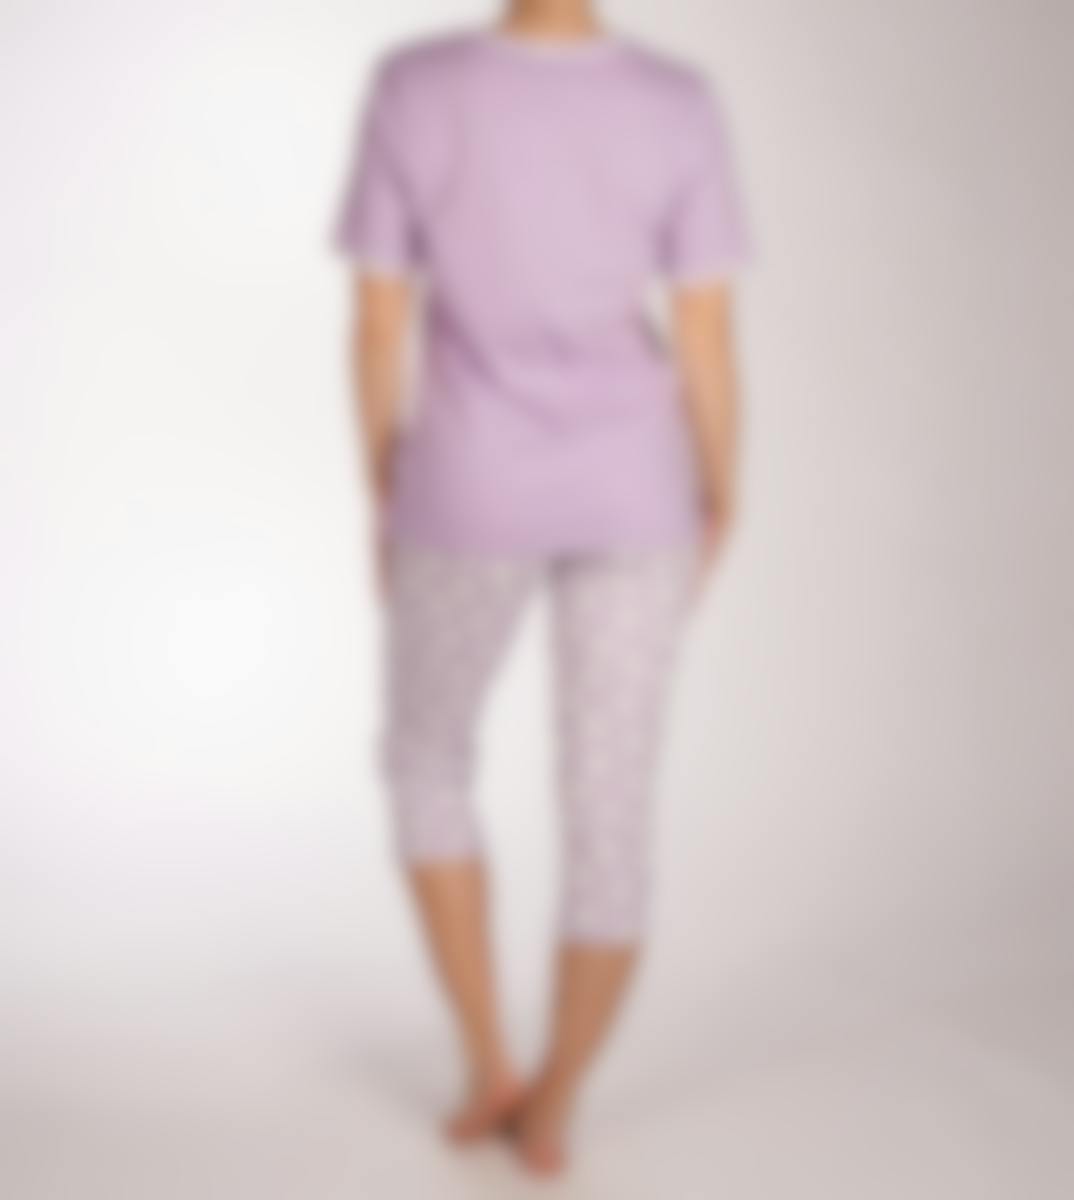 Pastunette pyjama korte broek Lovely Lilac D